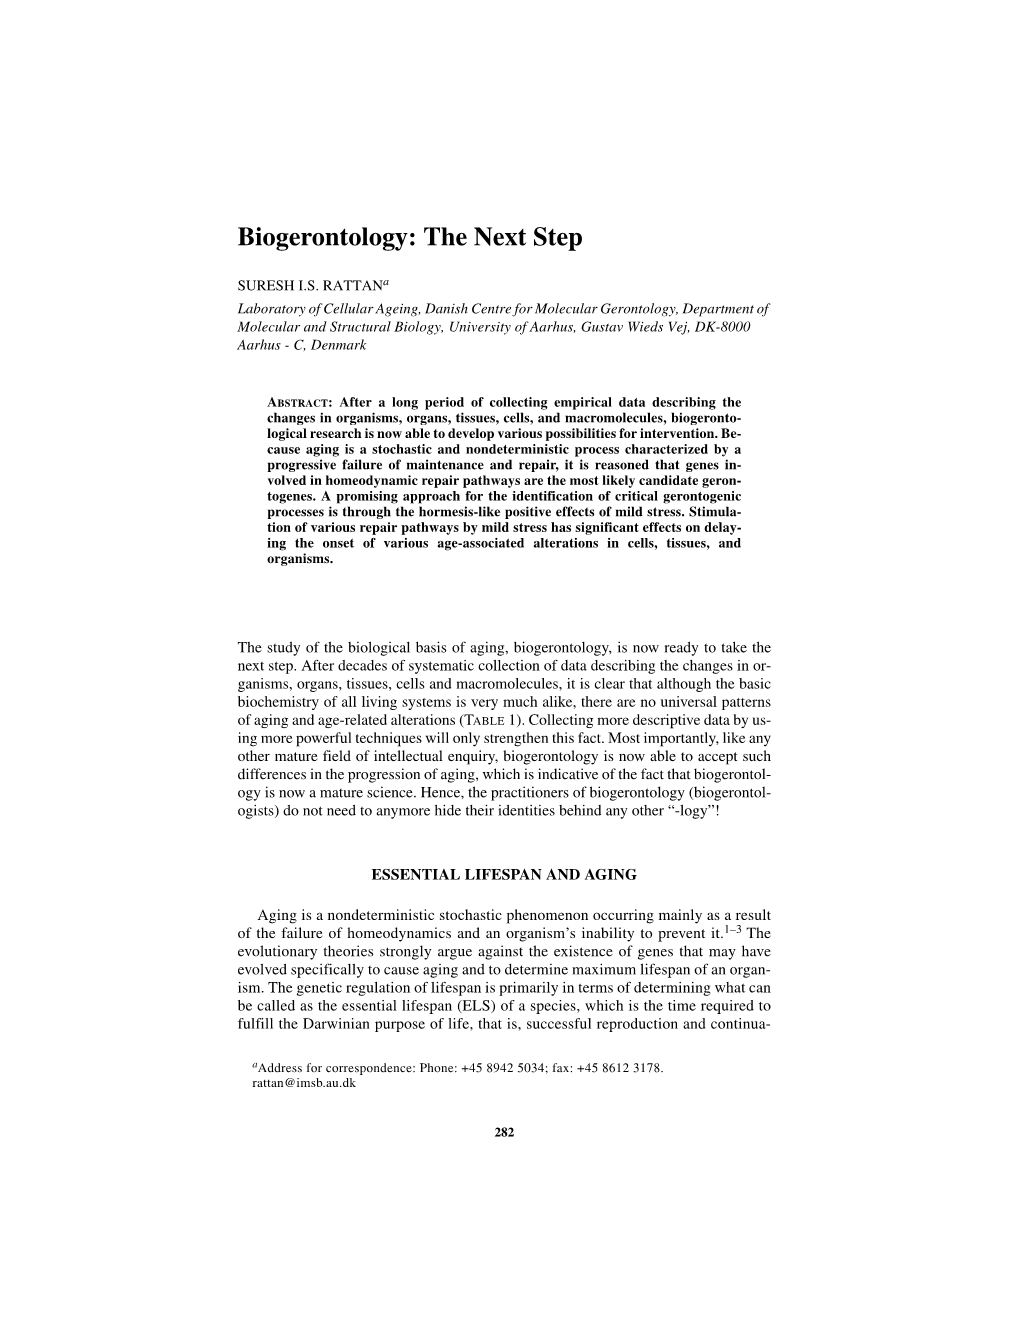 Biogerontology: the Next Step